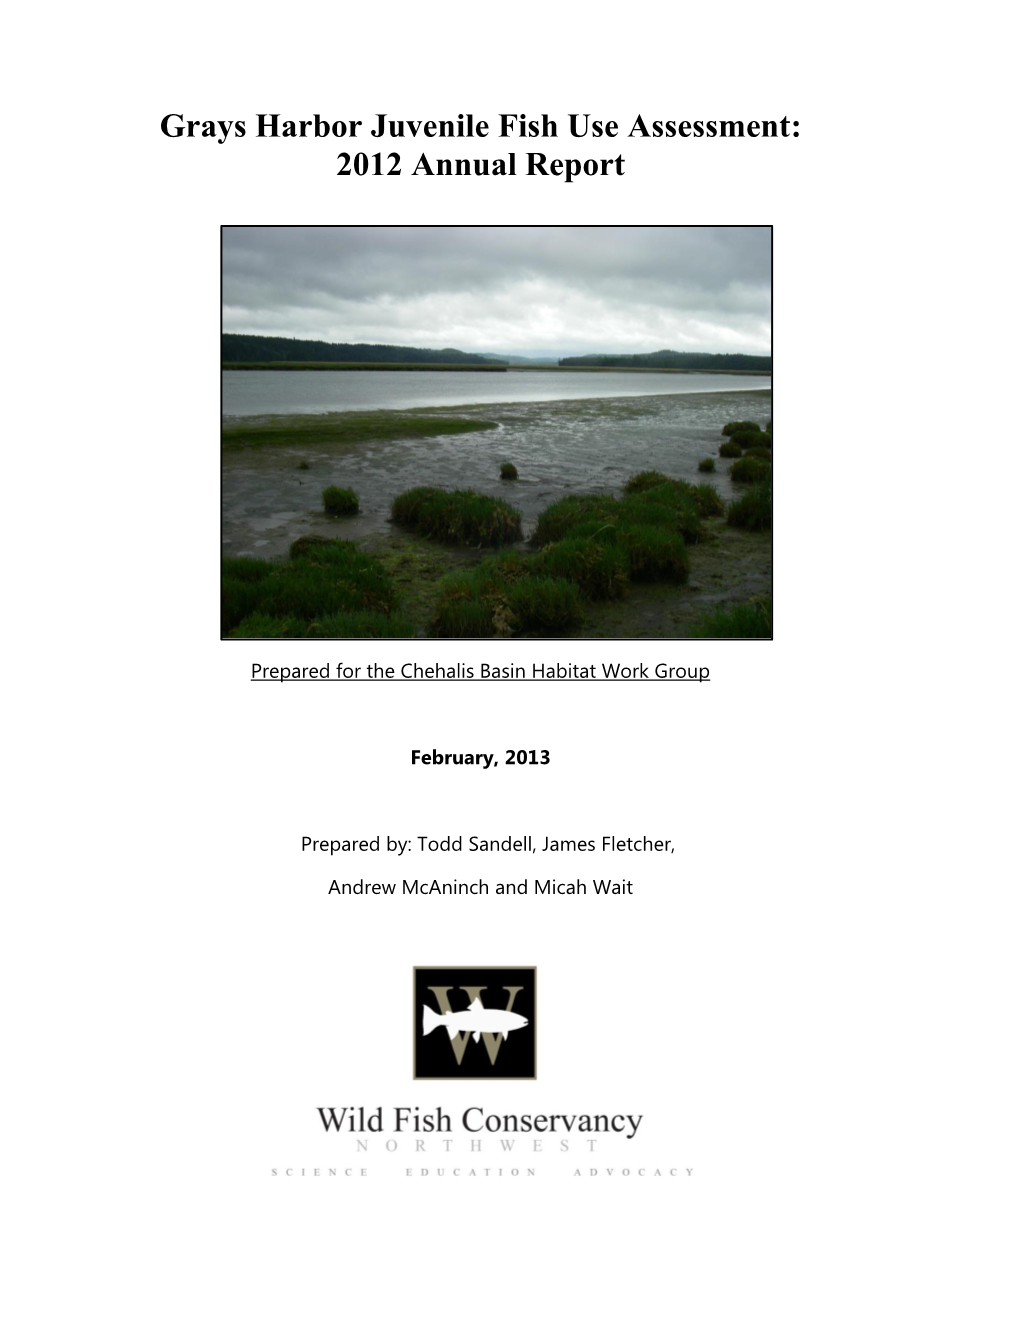 Grays Harbor Juvenile Fish Use Assessment: 2012 Annual Report